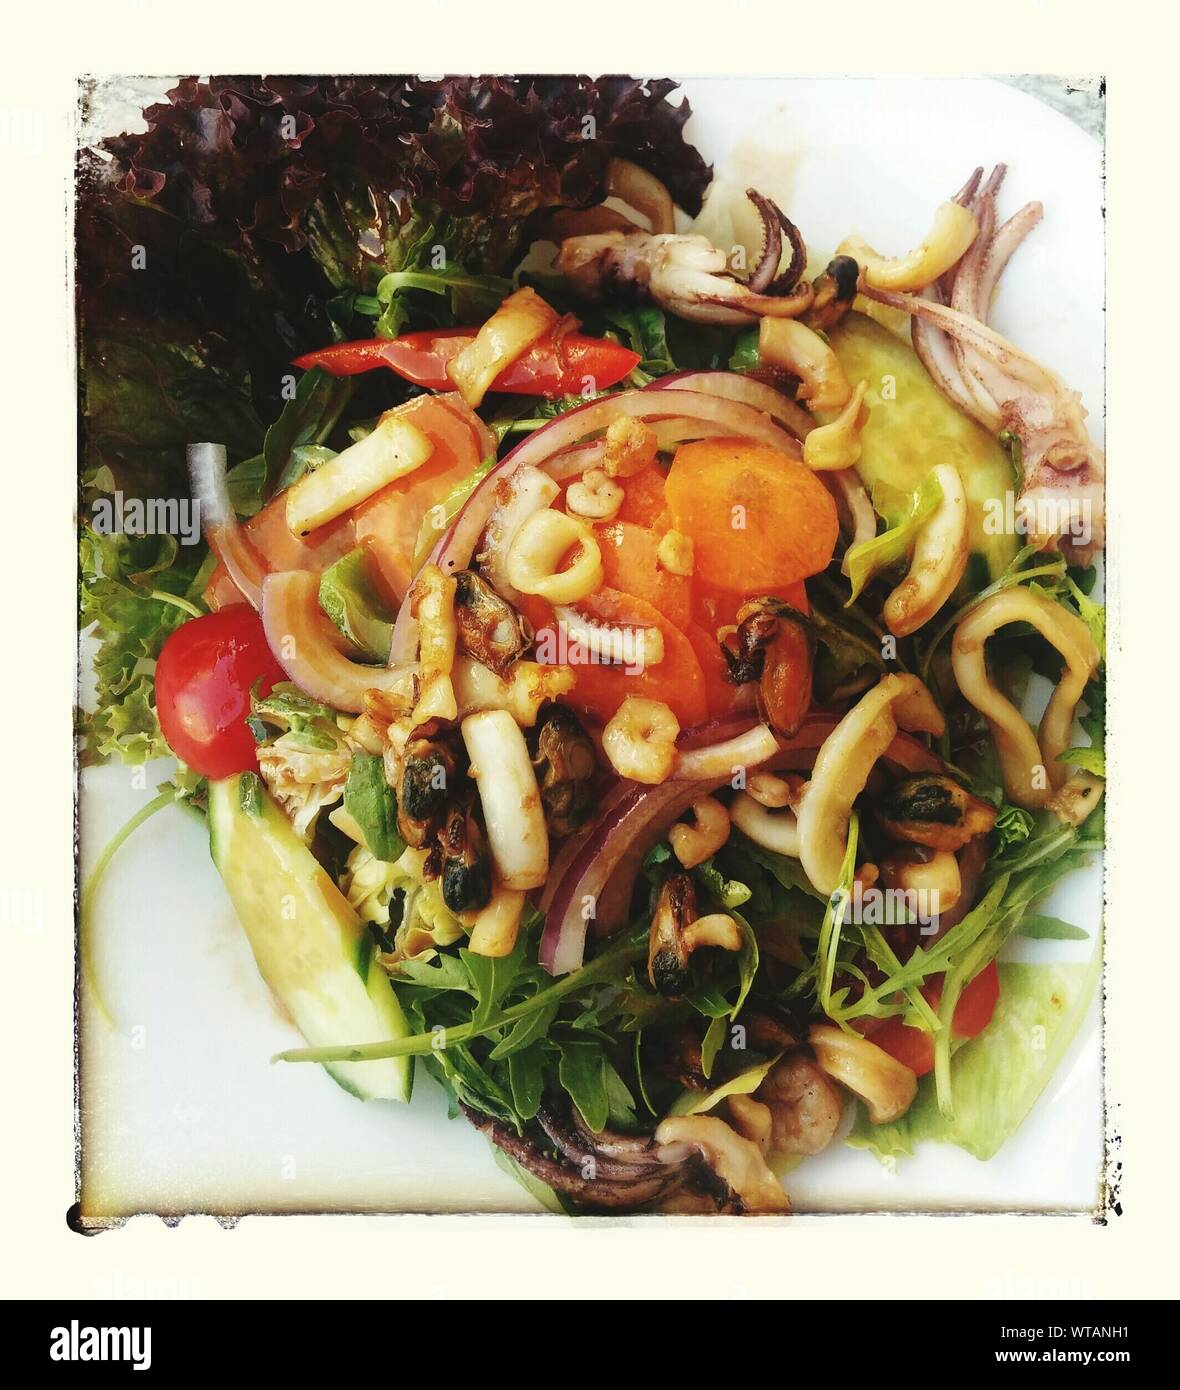 Vegetarian Food On Plate Stock Photo